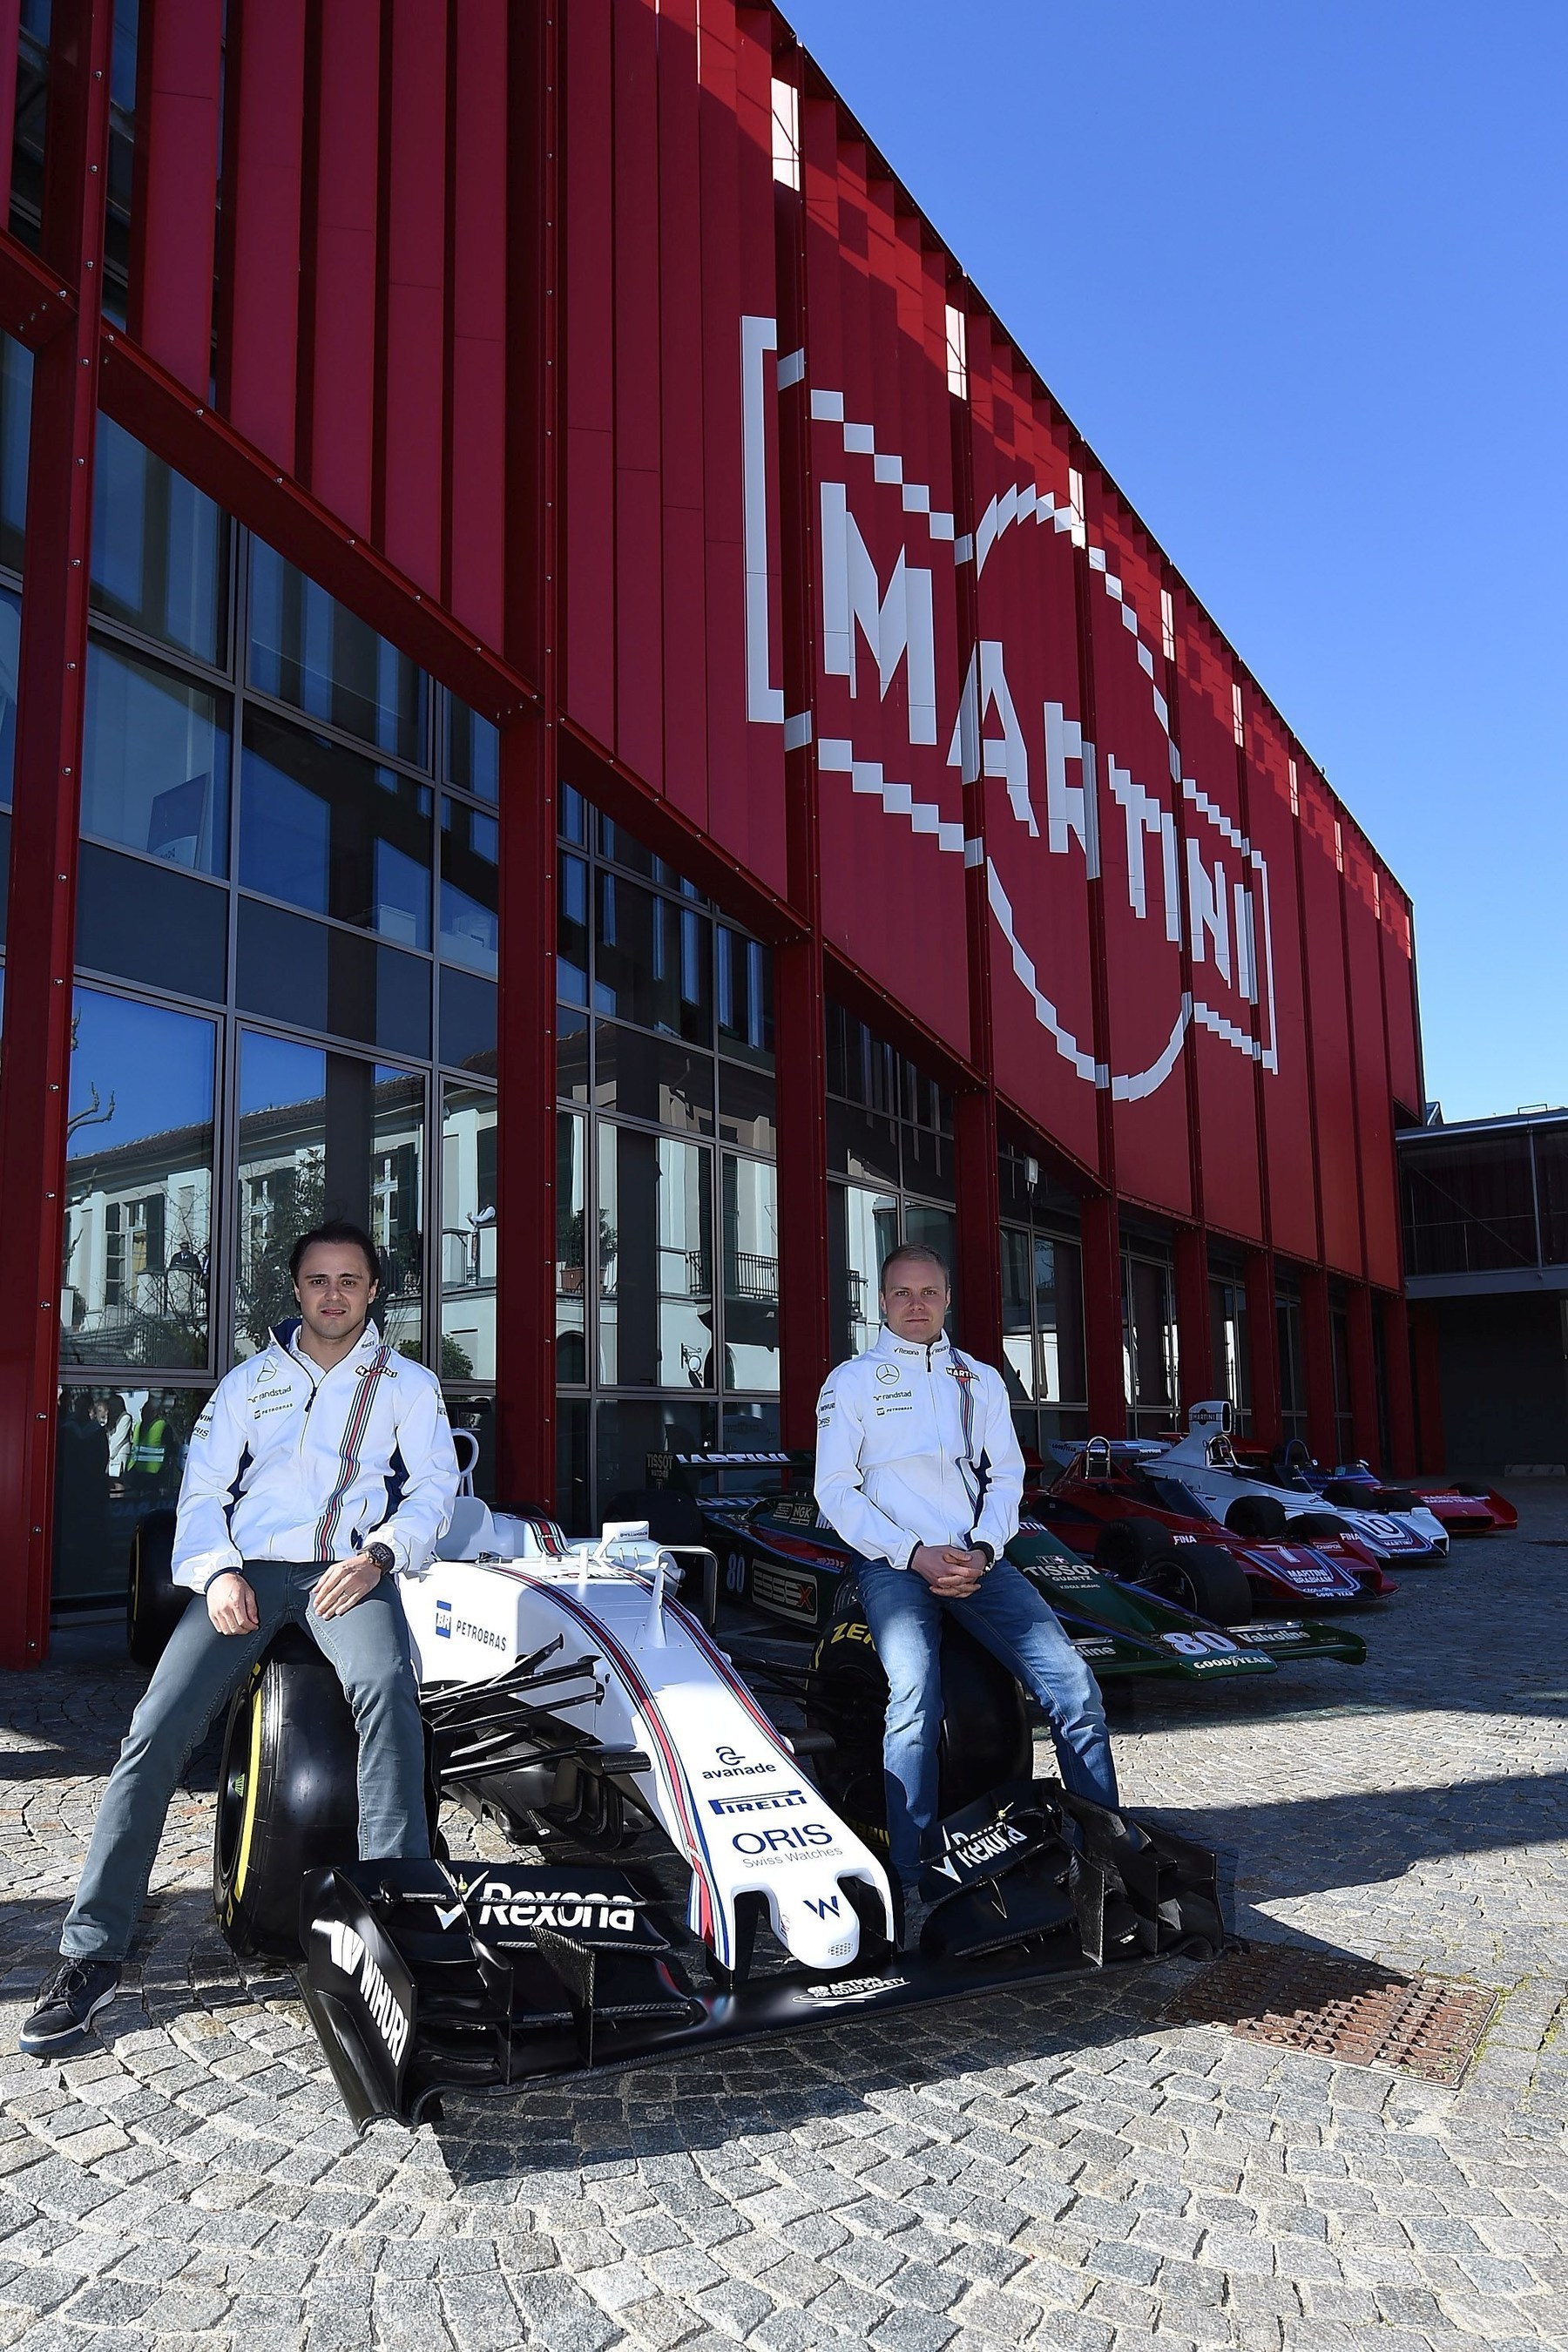 MARTINI launches the 2016 race season with Williams Martini Racing F1 drivers Felipe Massa and Valtteri Bottas. (PRNewsFoto/MARTINI) (PRNewsFoto/MARTINI)